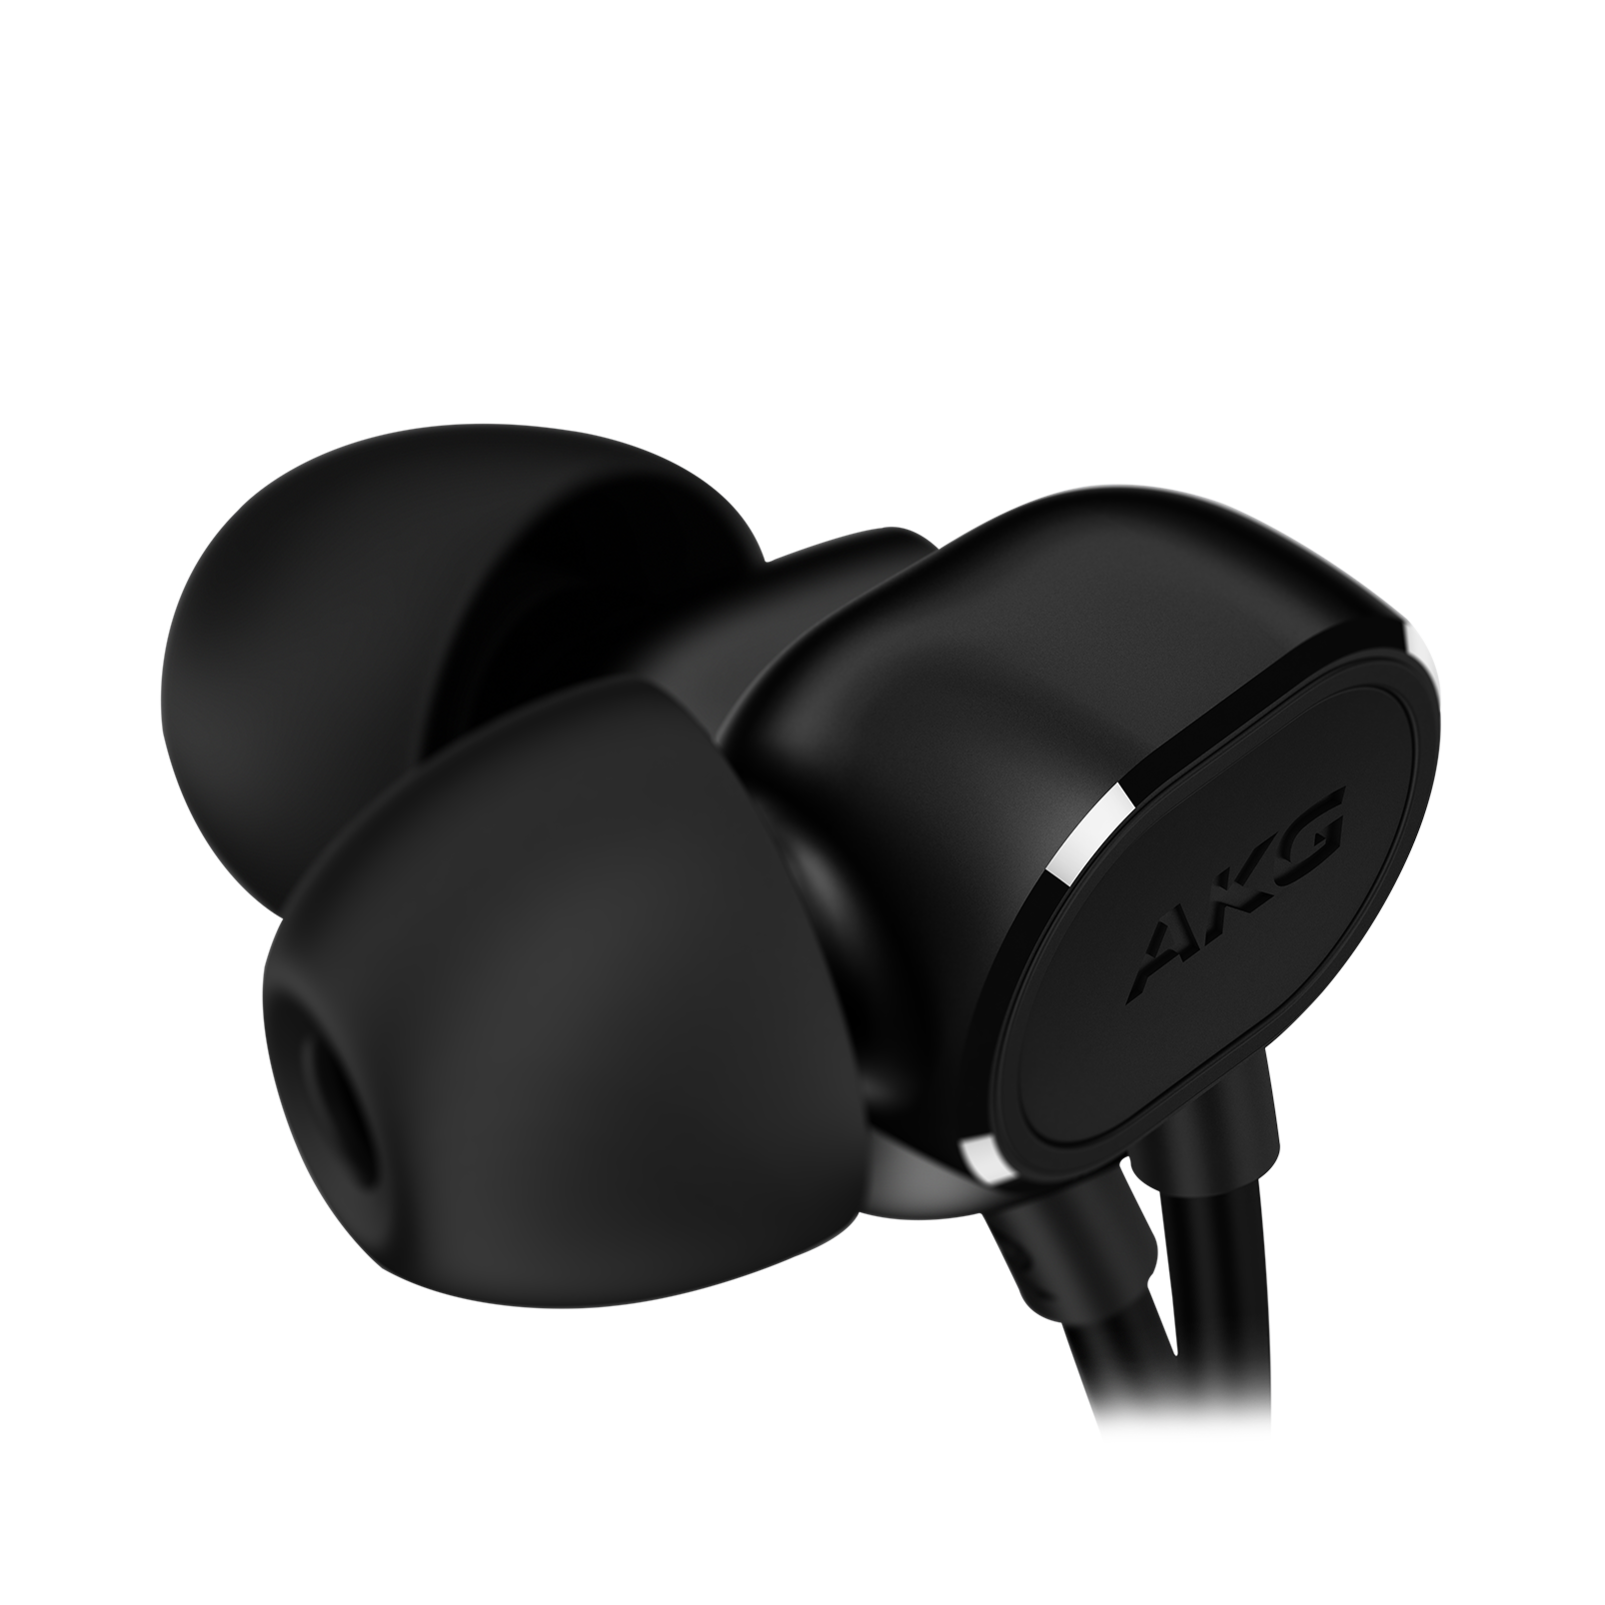 N20 - Black - Reference class in-ear headphones in aluminum enclousure - Detailshot 1